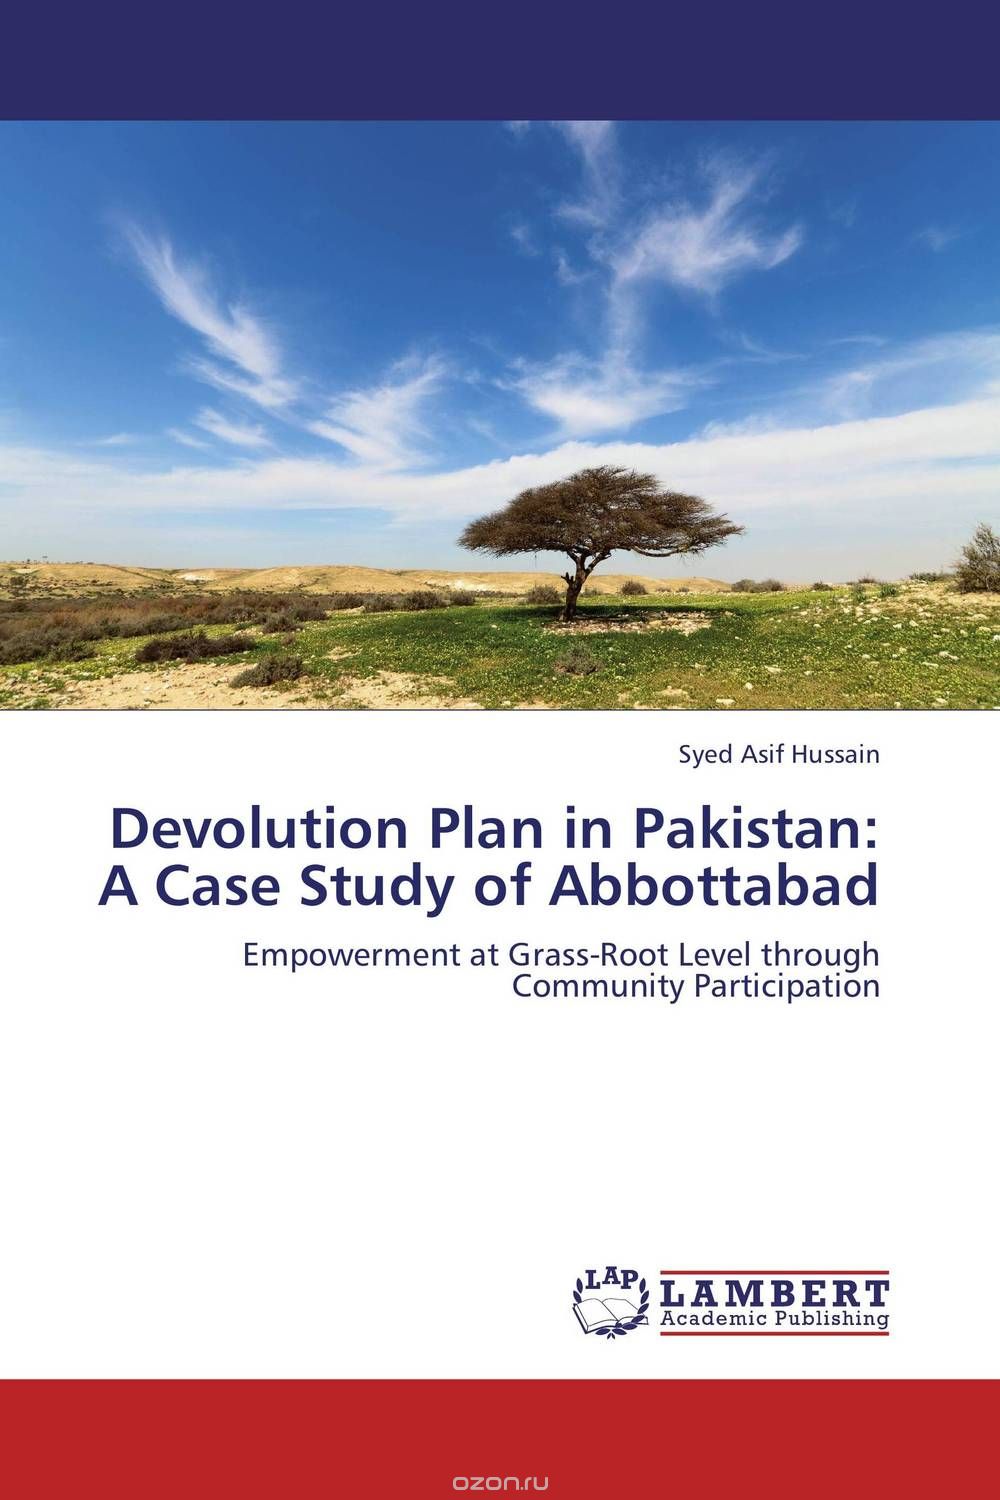 Скачать книгу "Devolution Plan in Pakistan: A Case Study of Abbottabad"